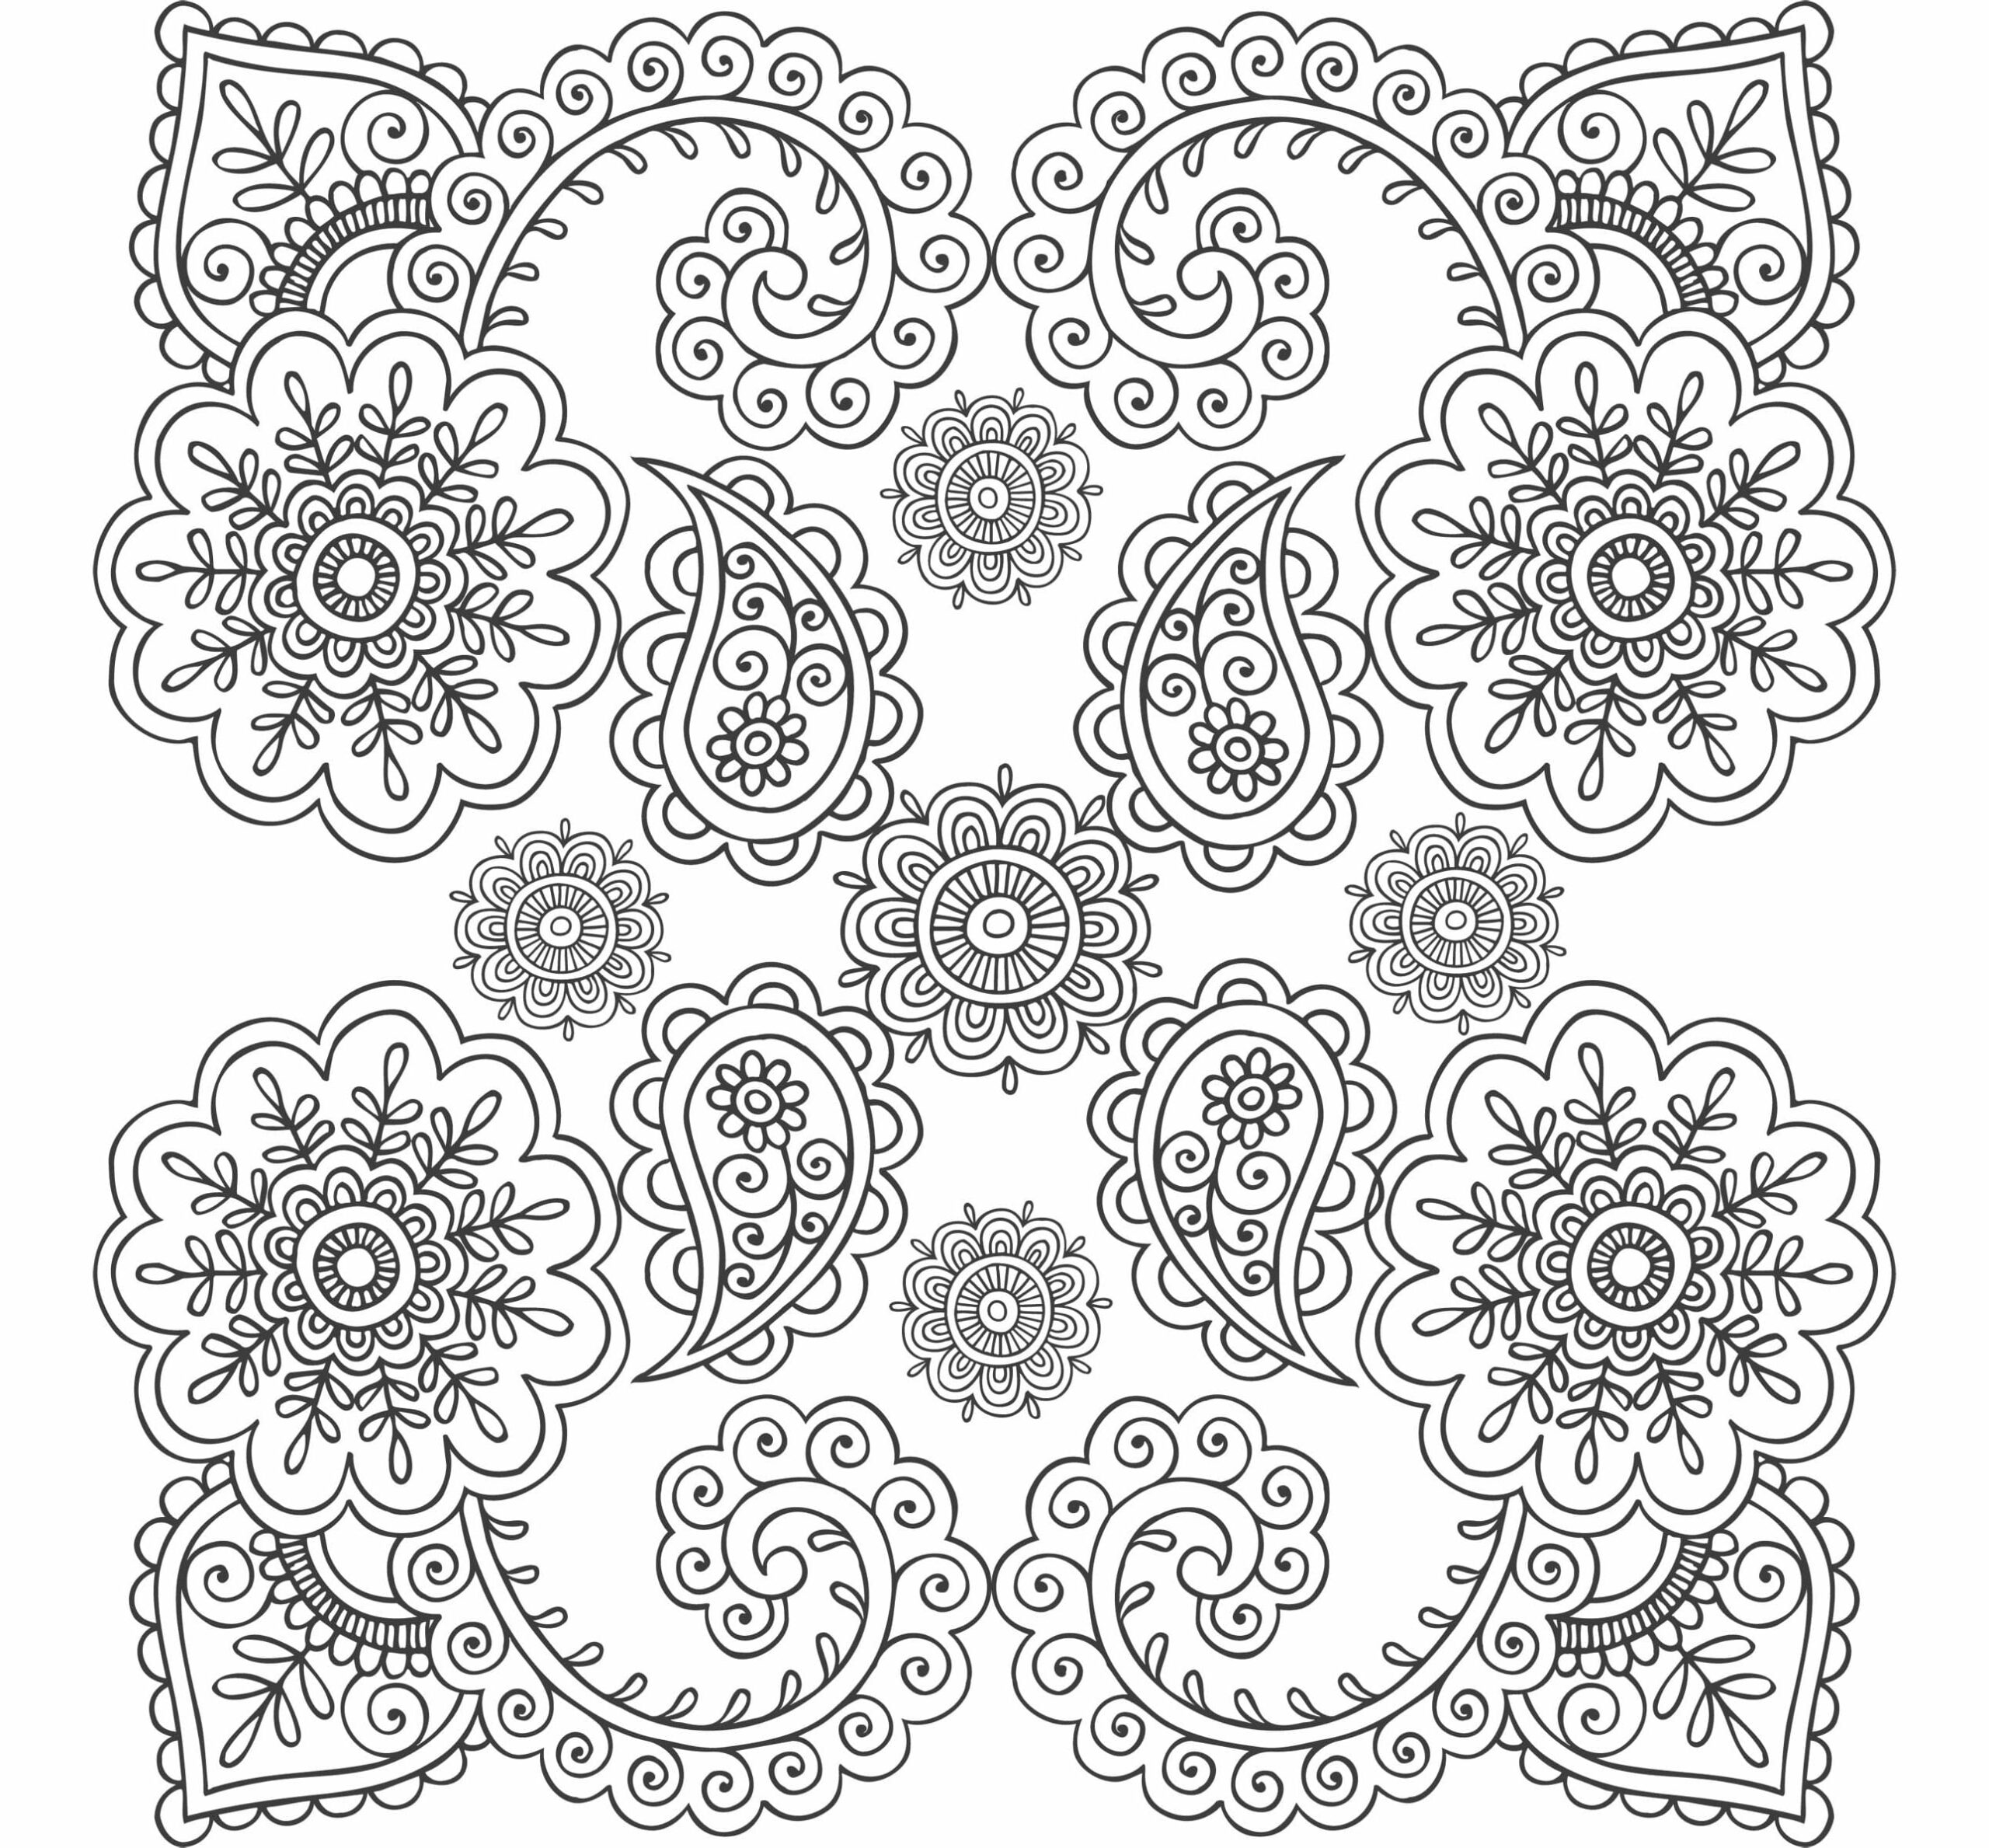 Mandala Anti-stress coloring page